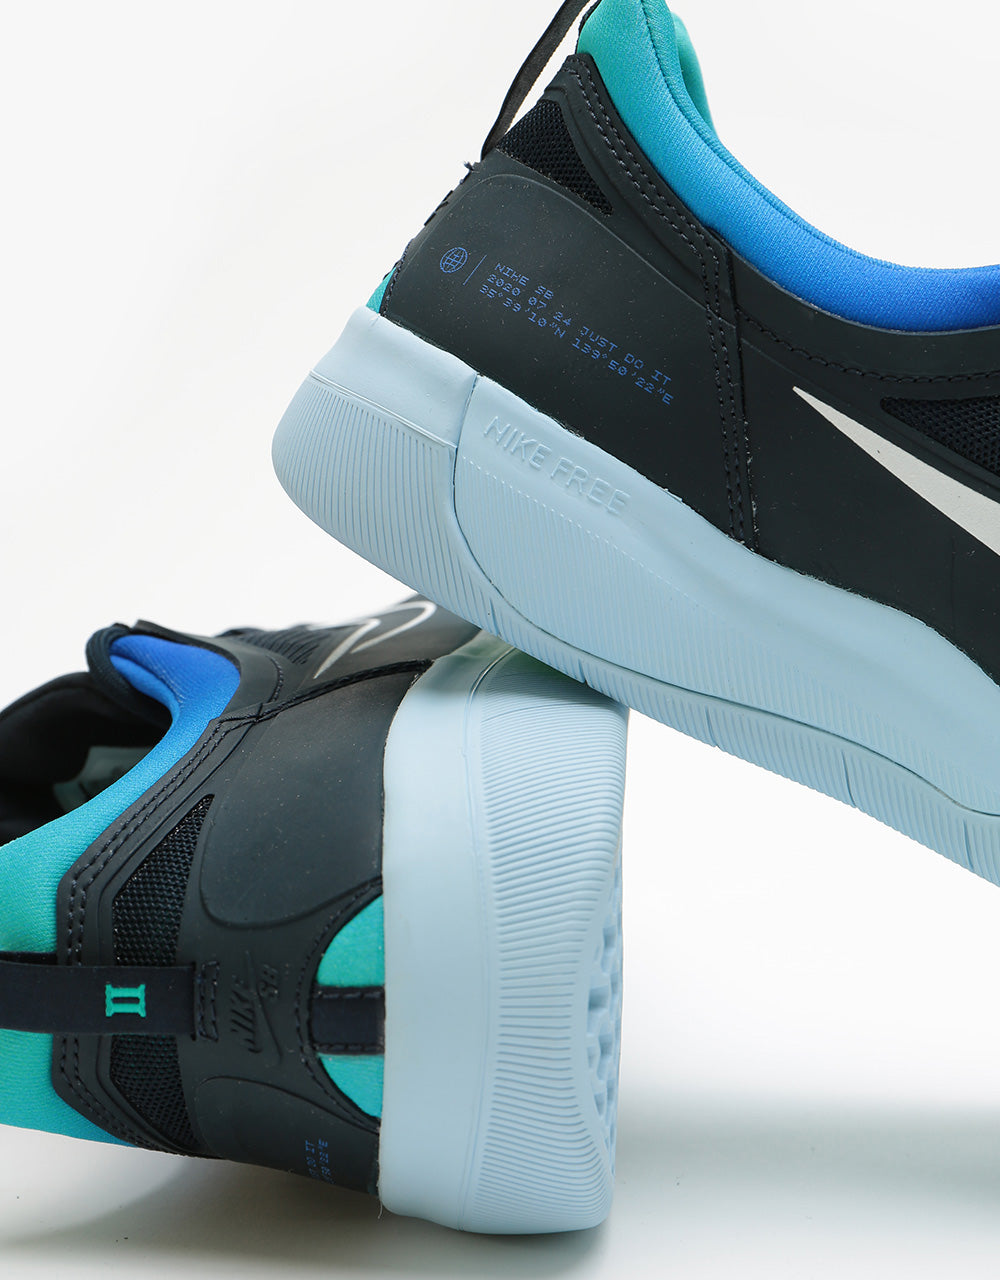 Nike SB Nyjah Free 2.0 T Skate Shoes - Dark Obsidian/White-Hyper Jade